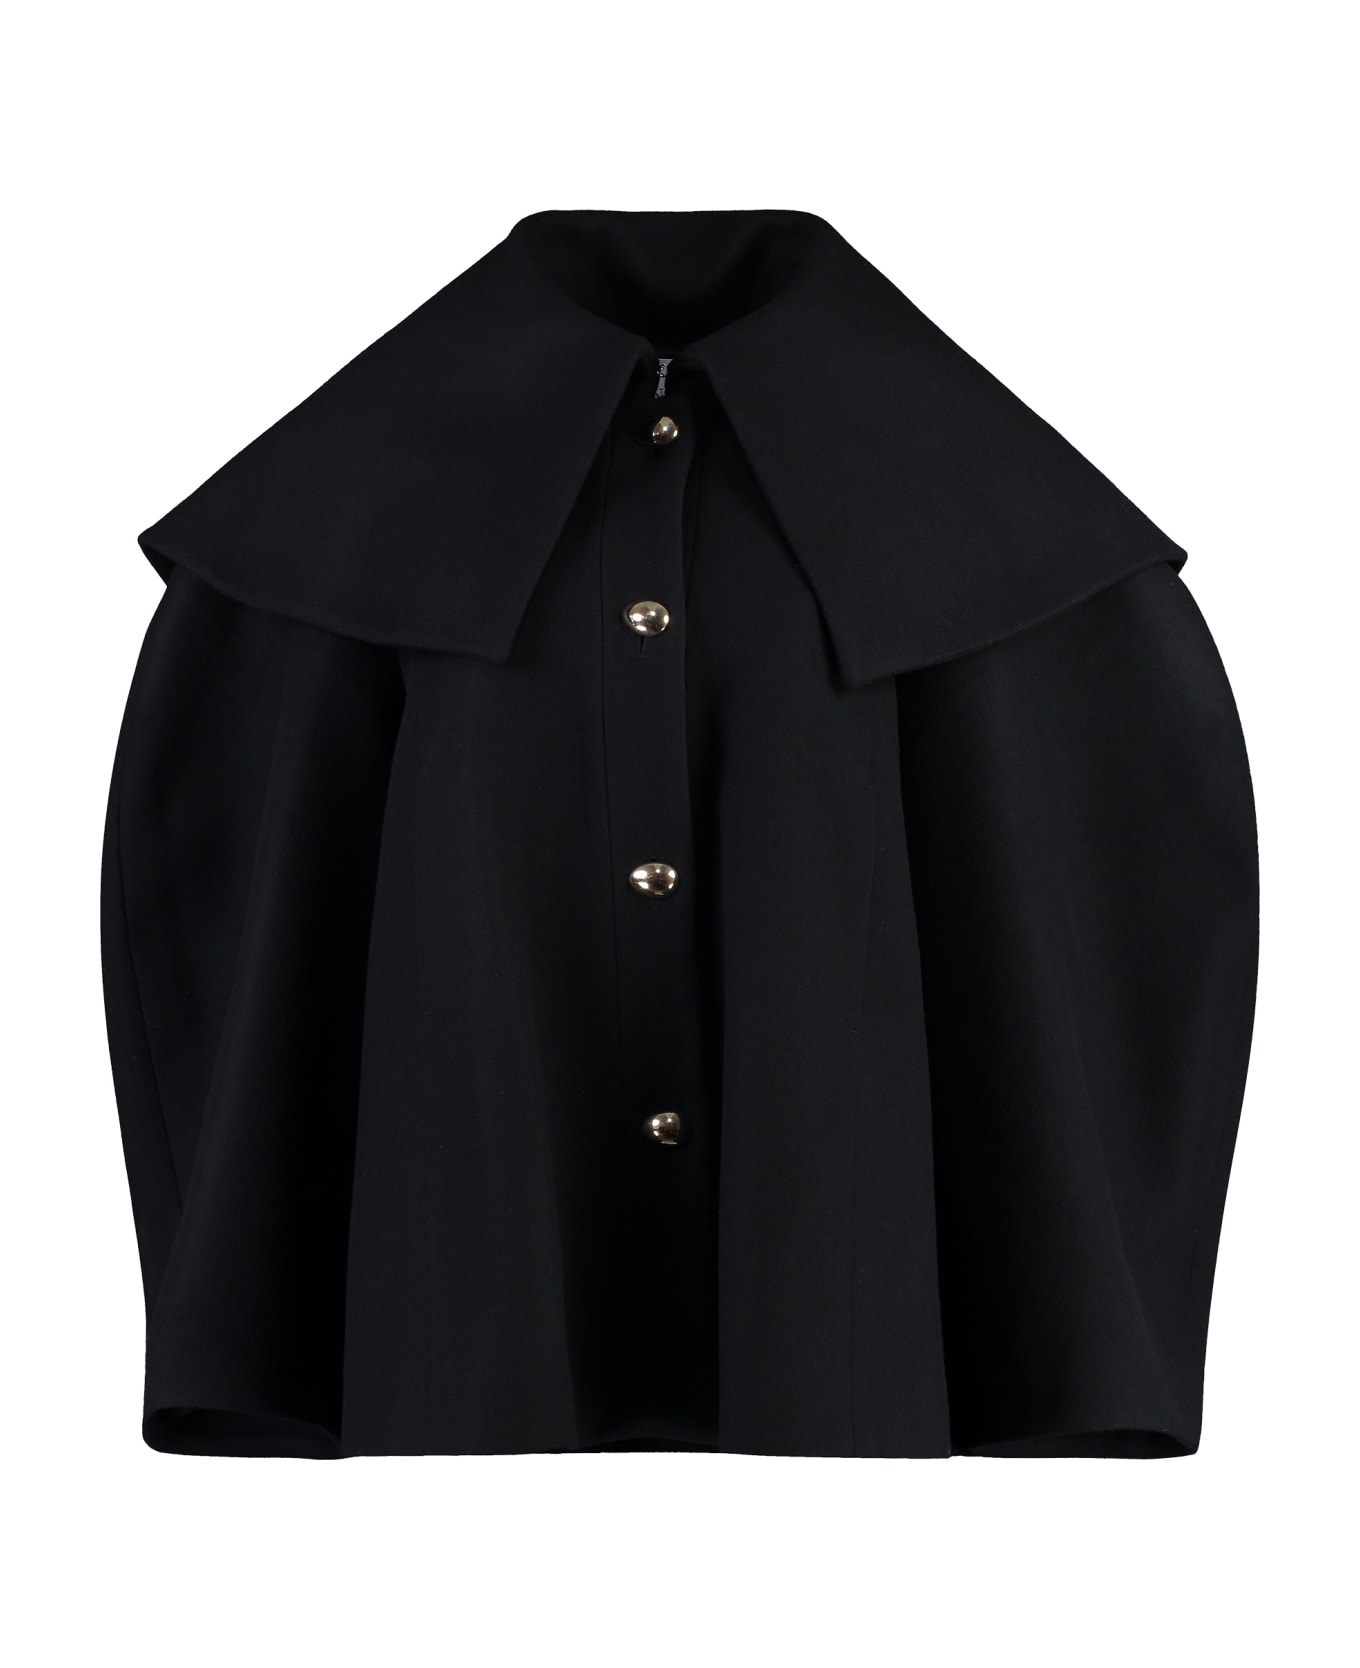 Nina Ricci Wool Blend Jacket - black ジャケット